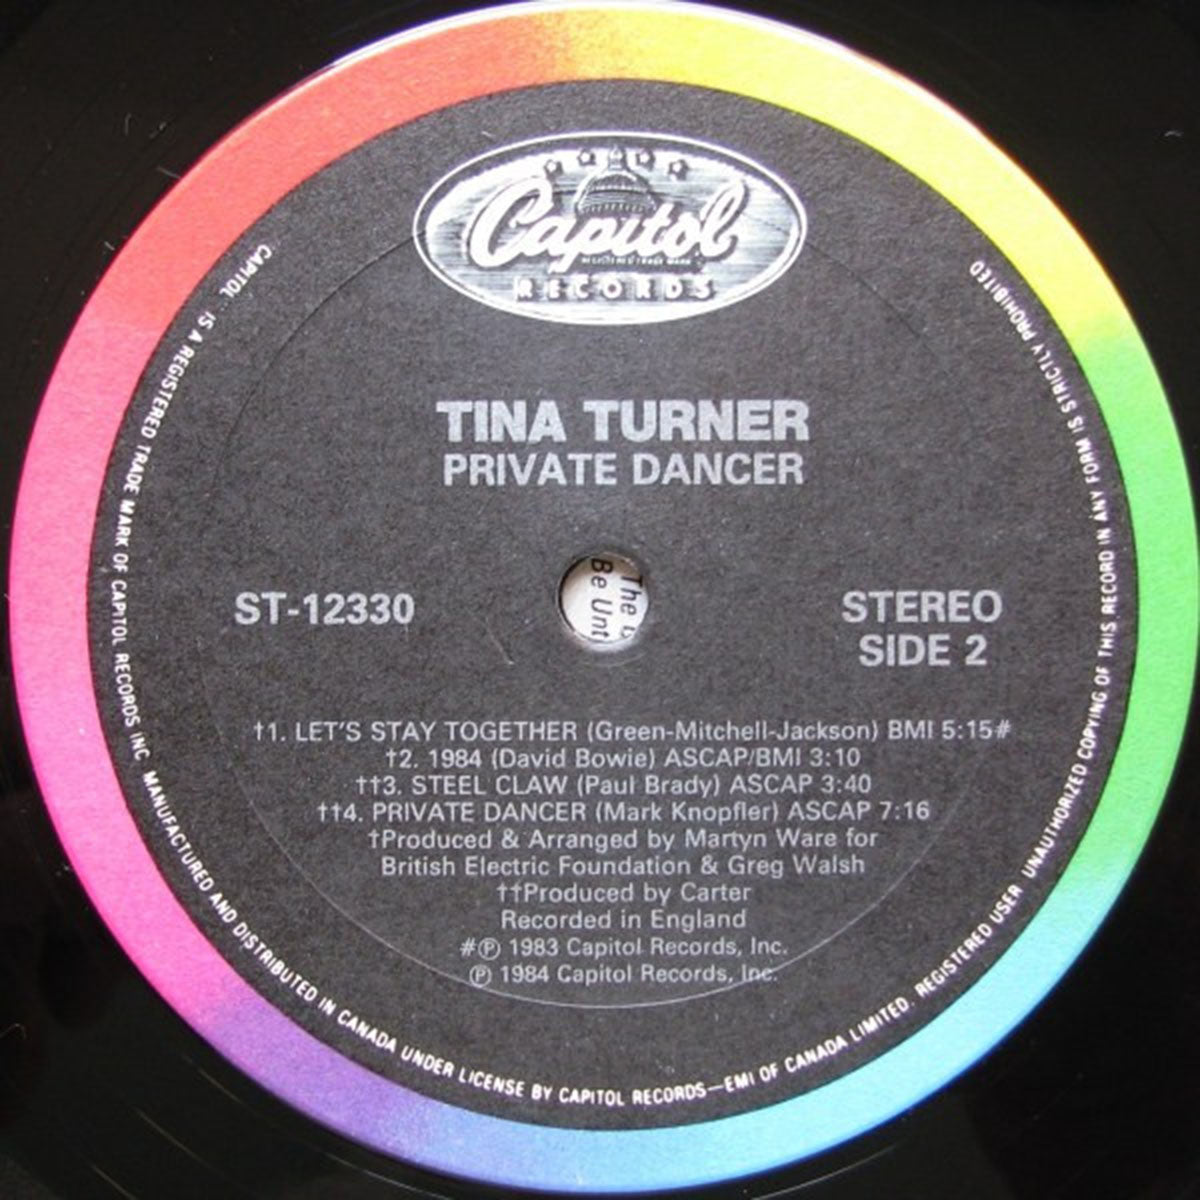 Tina Turner – Private Dancer - 1984